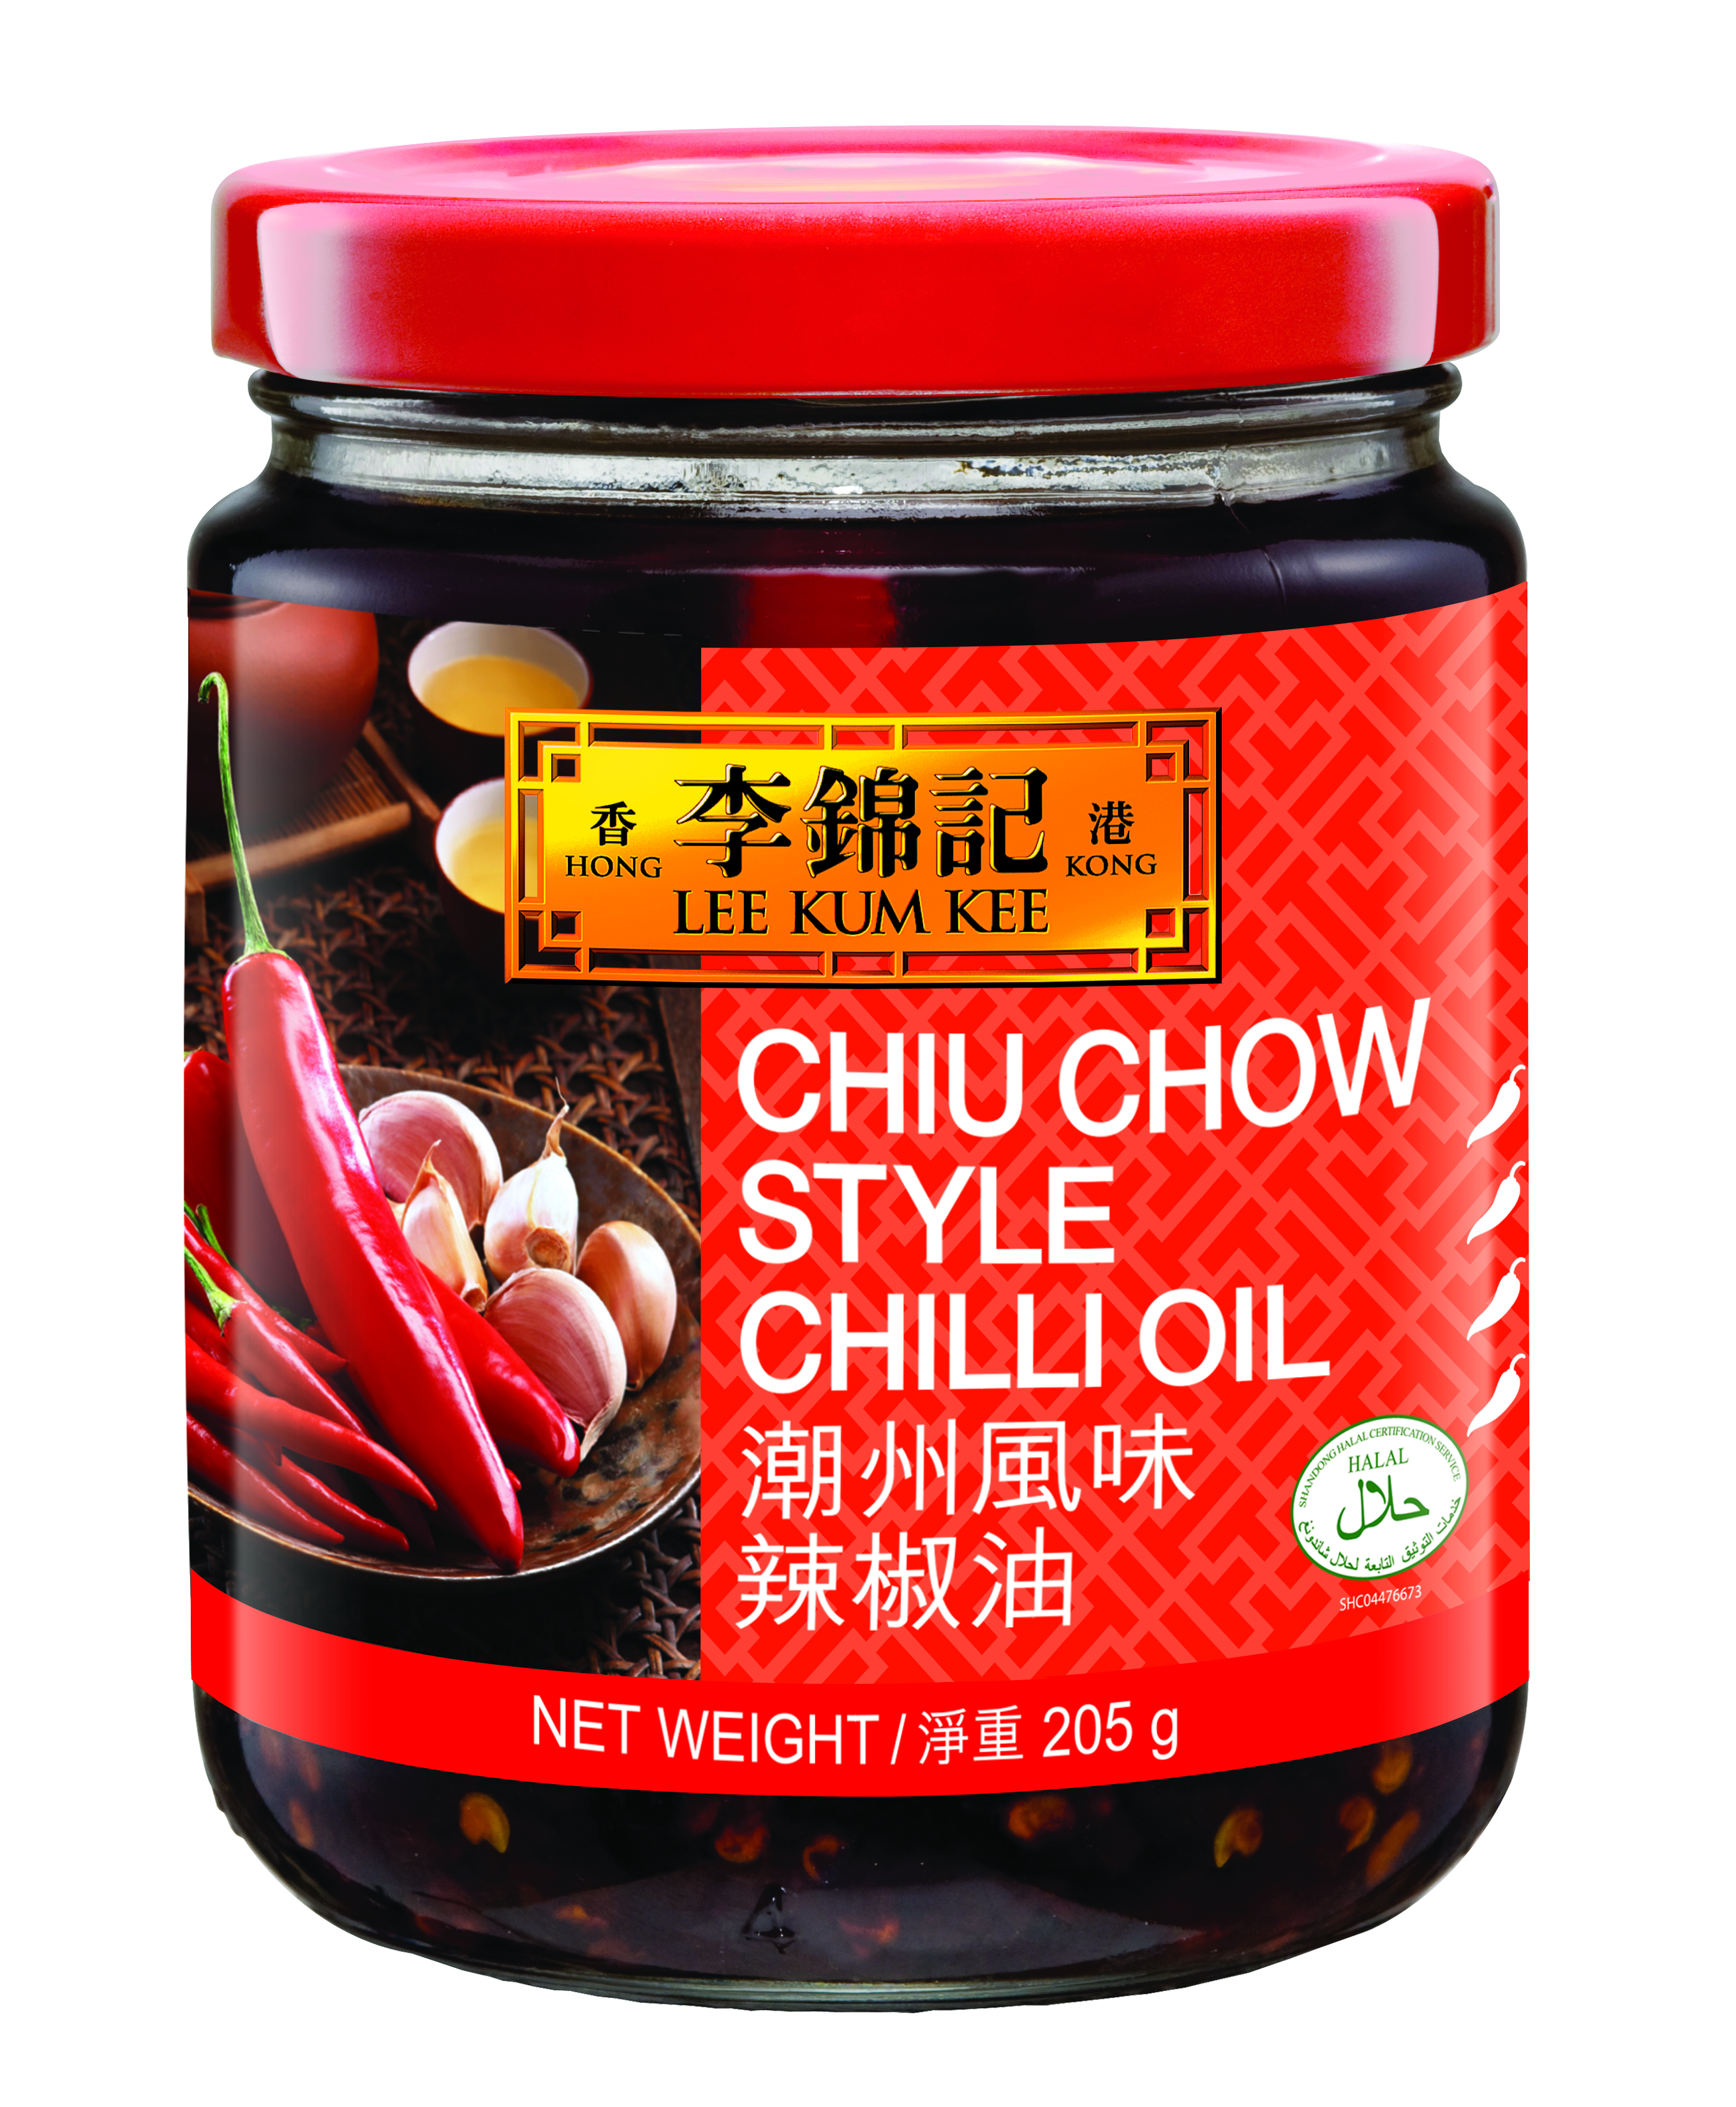 Chiu Chow Chili Oil 205g